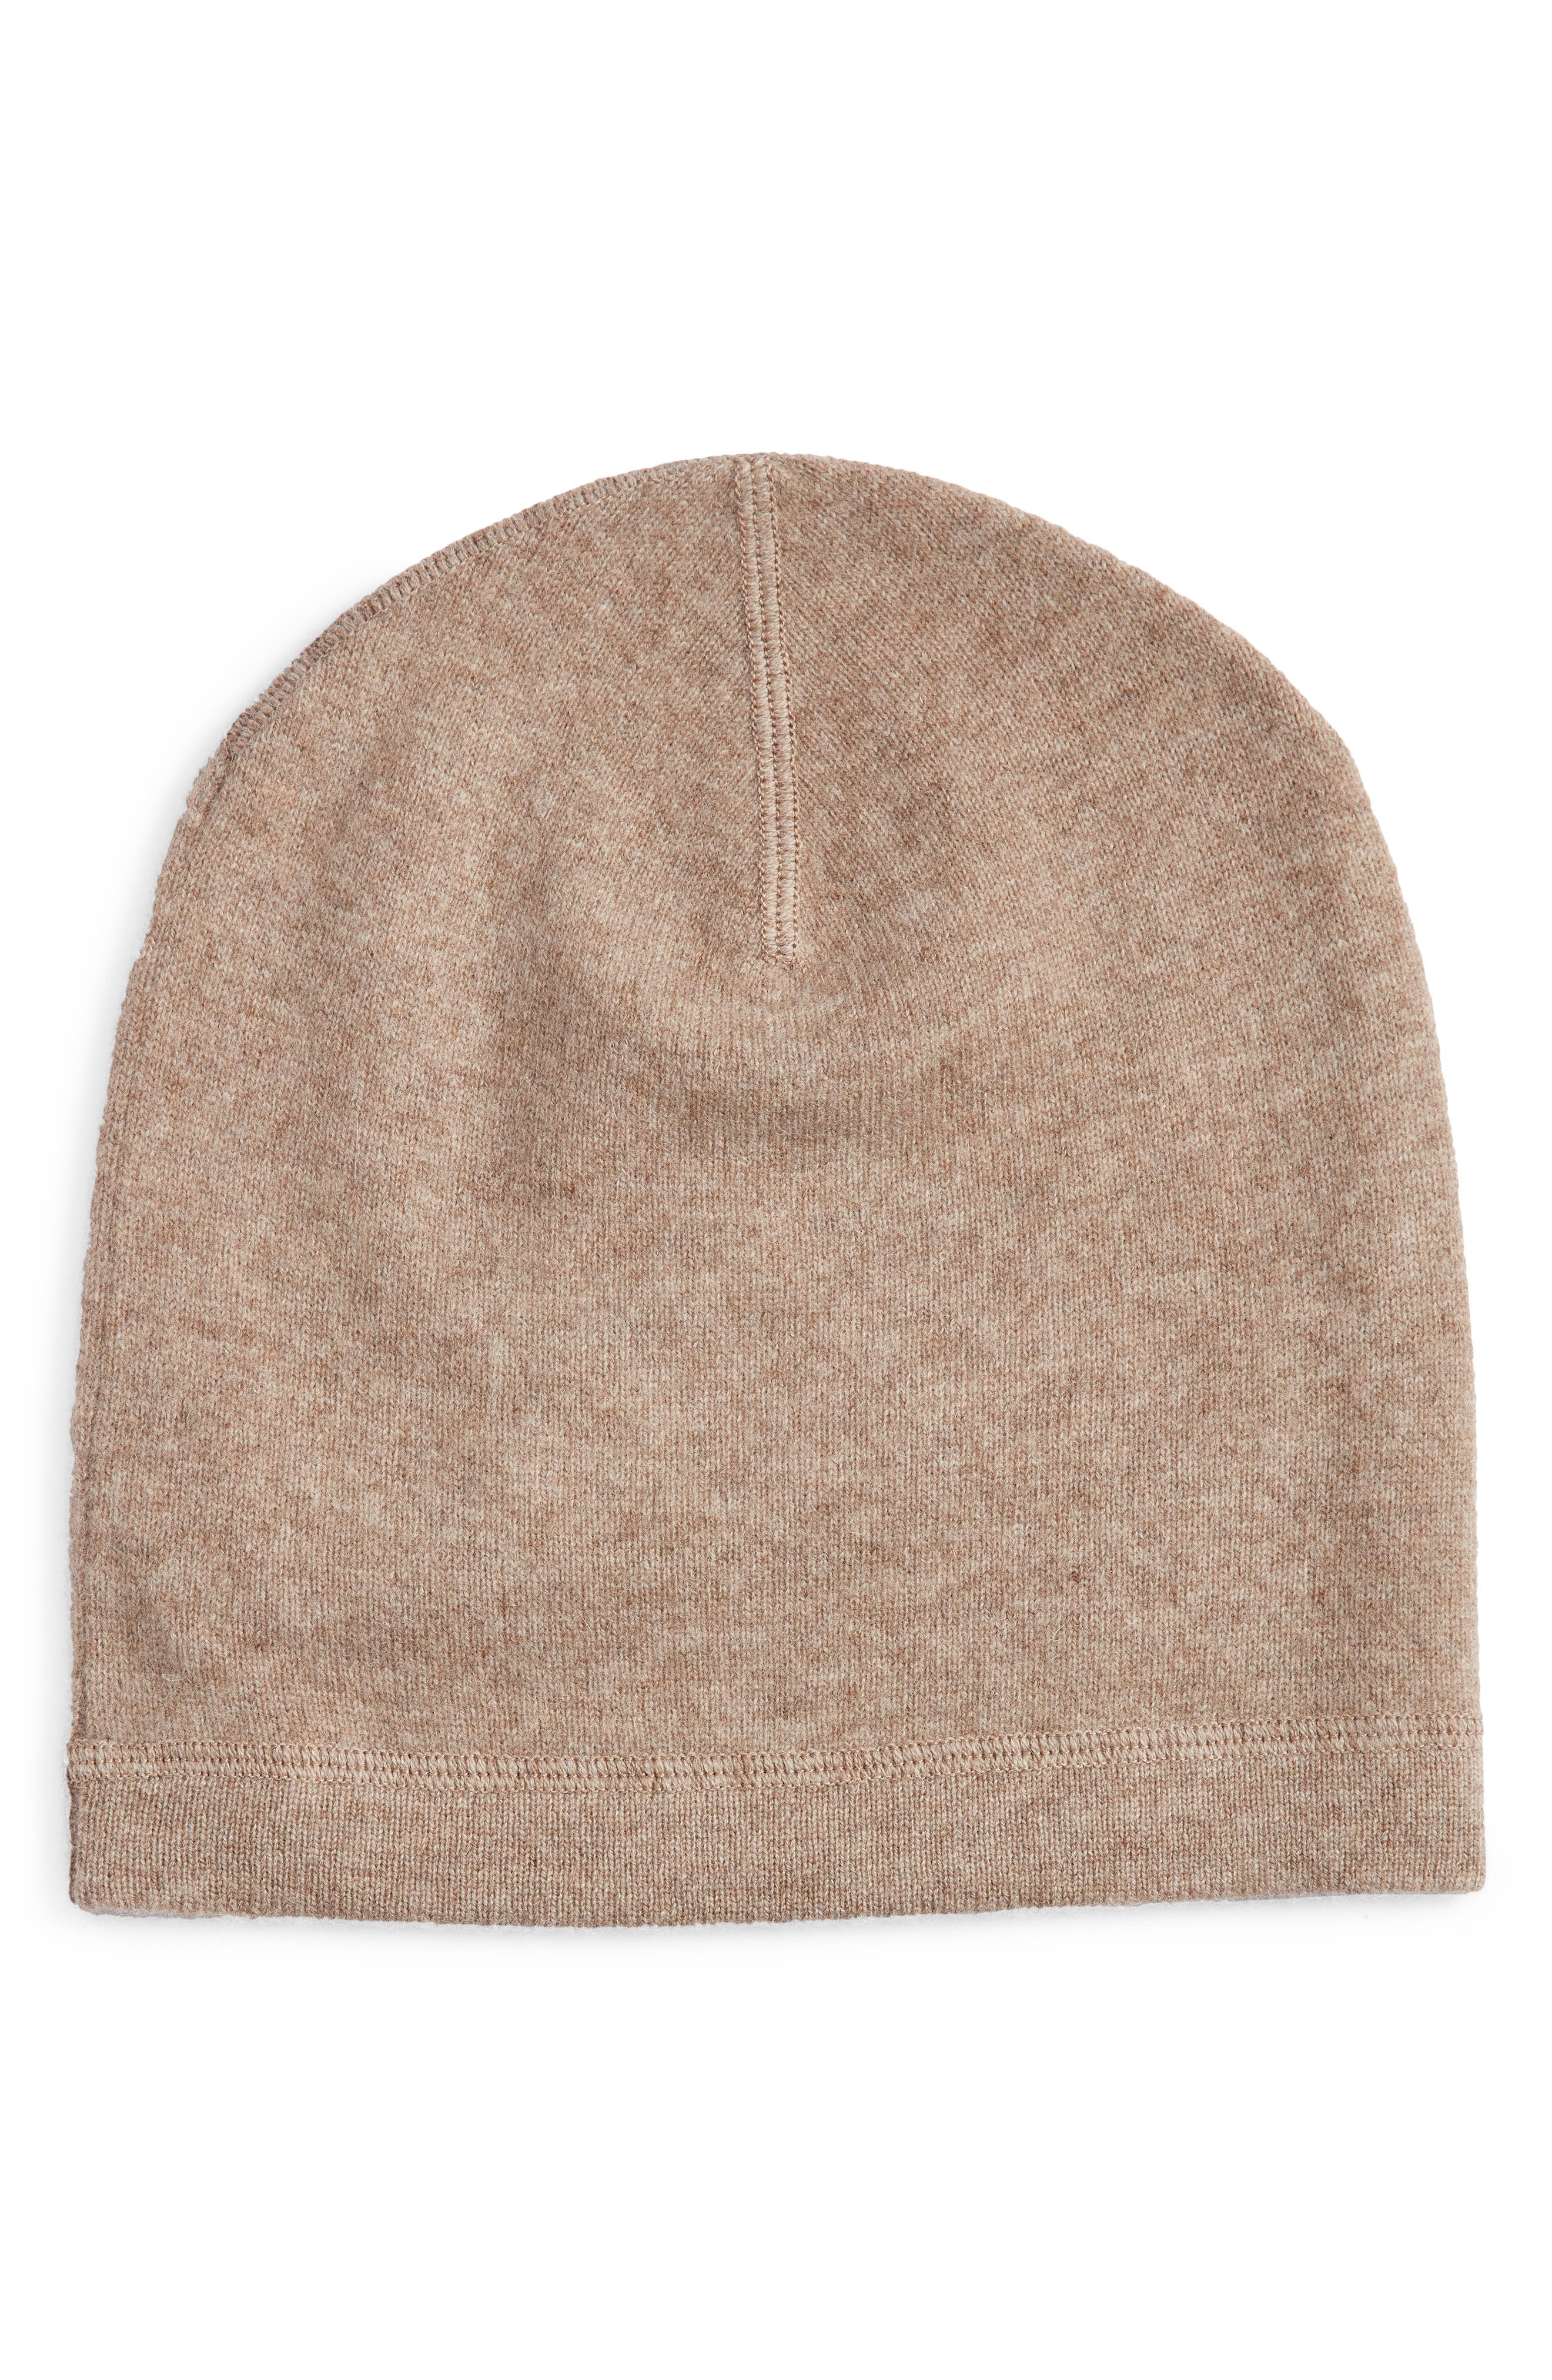 Fendi Hat in Brown for Men Mens Accessories Hats 